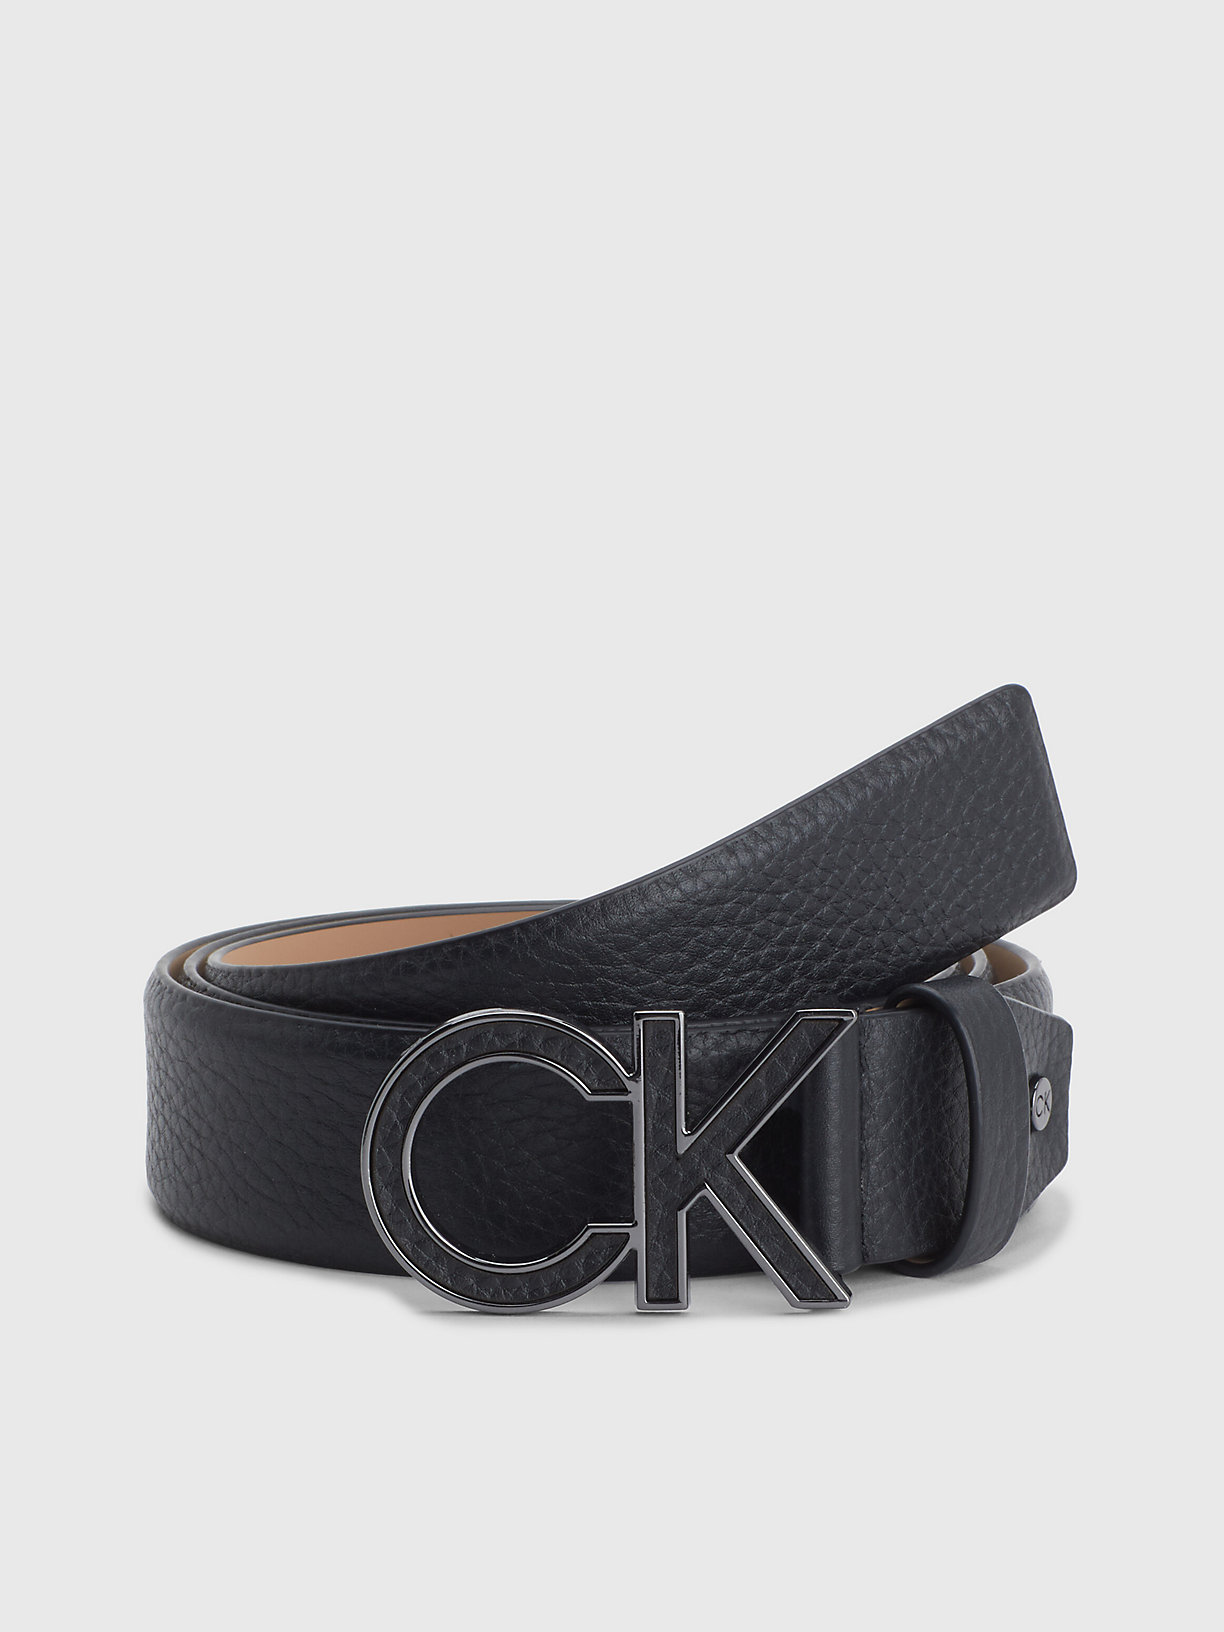 CK BLACK Ceinture en cuir avec logo for hommes CALVIN KLEIN